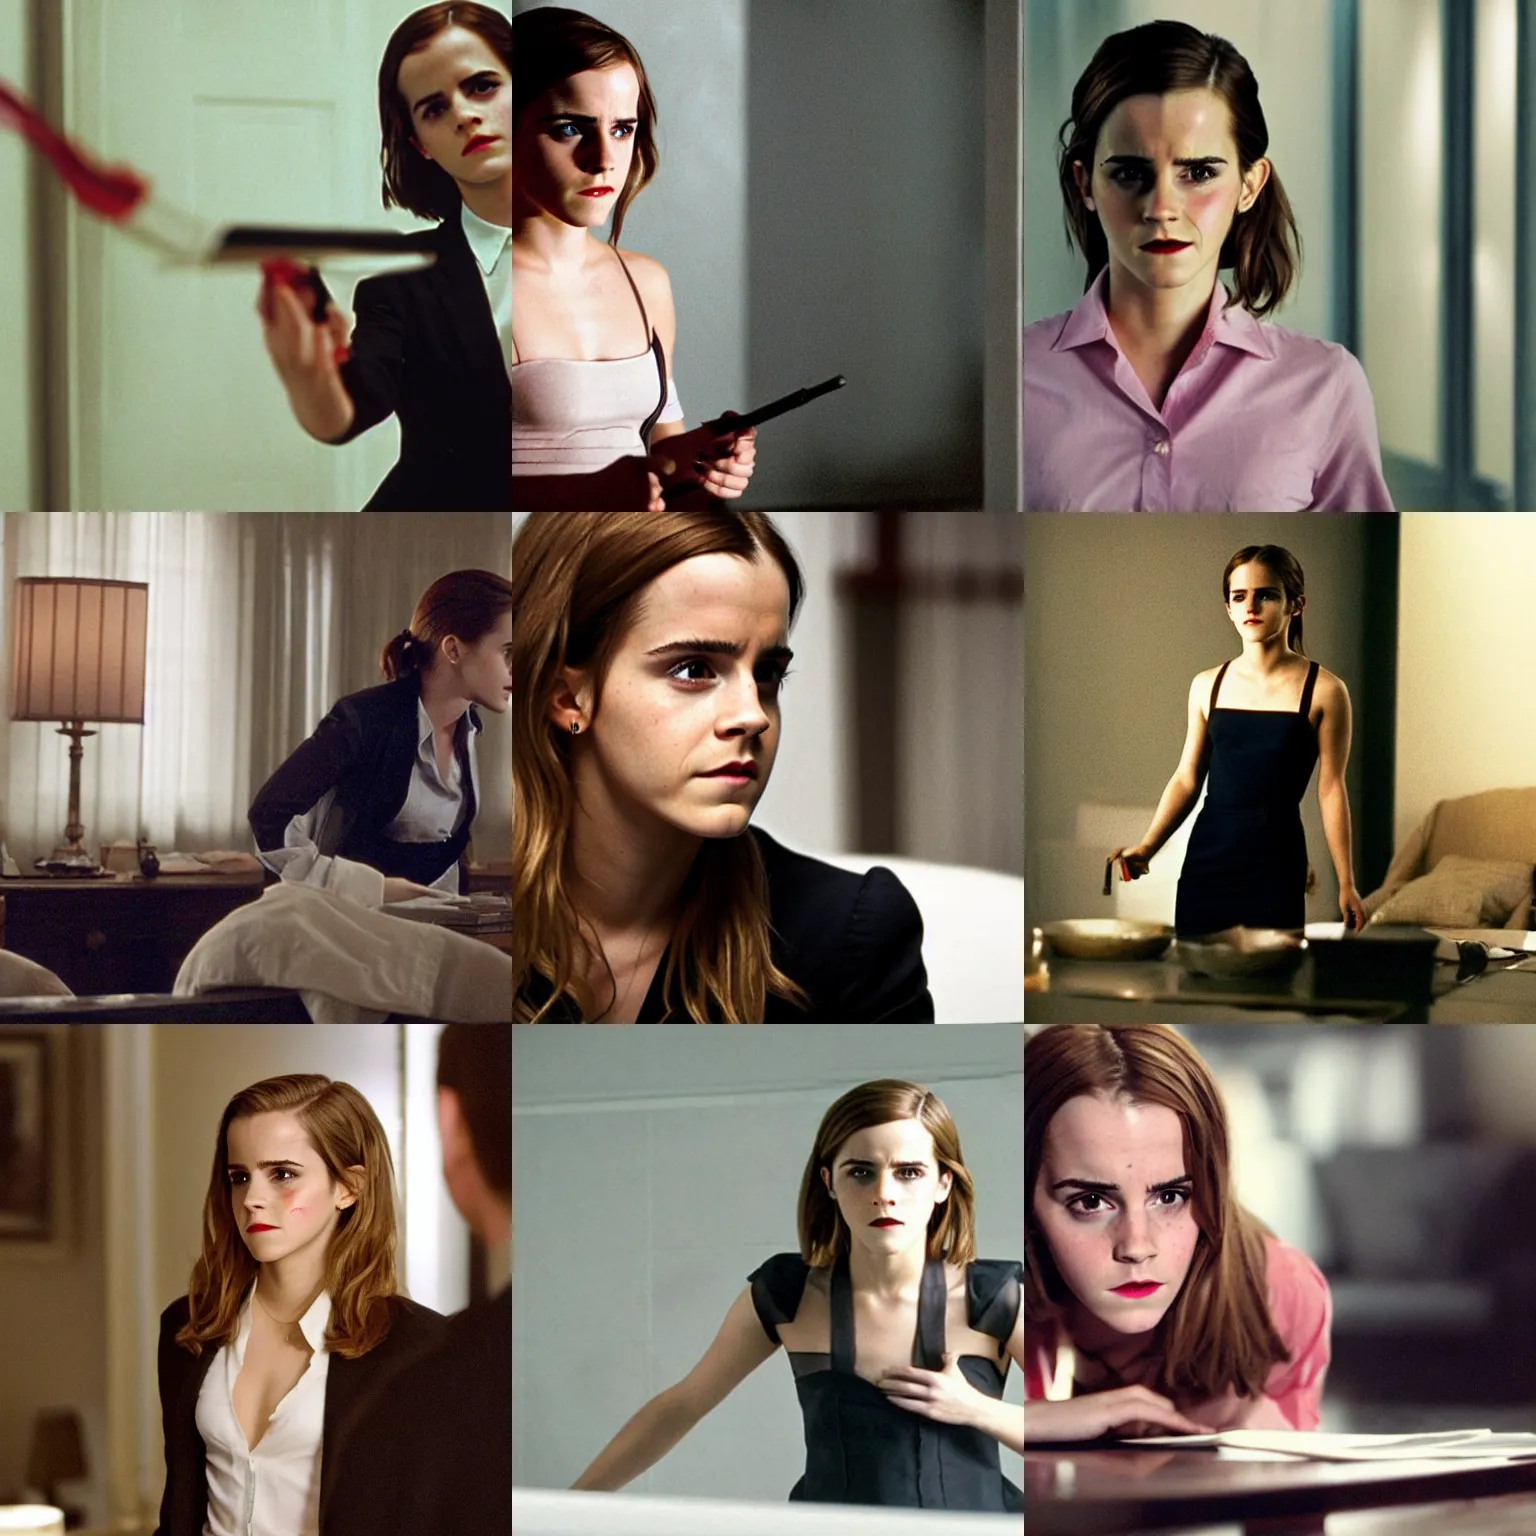 Prompt: Movie still of Emma Watson in American Psycho